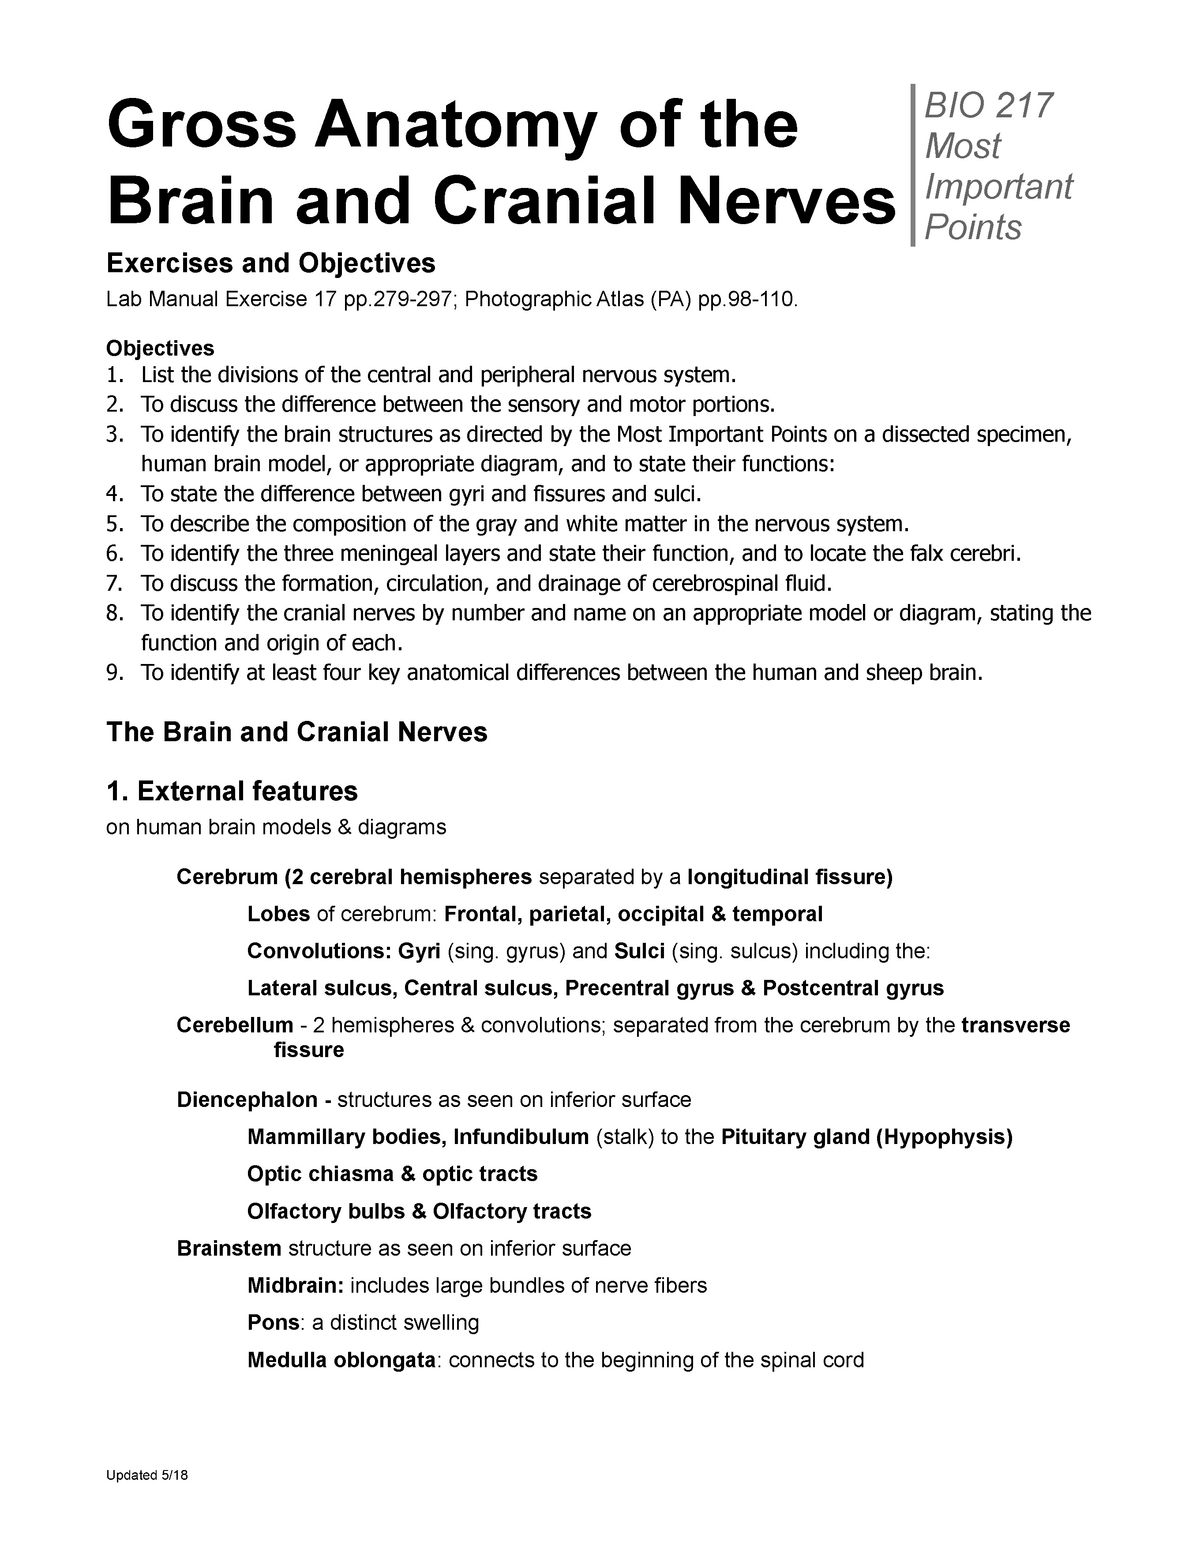 MIP 05 Gross Anatomy of the Brain and Cranial Nerves - StuDocu